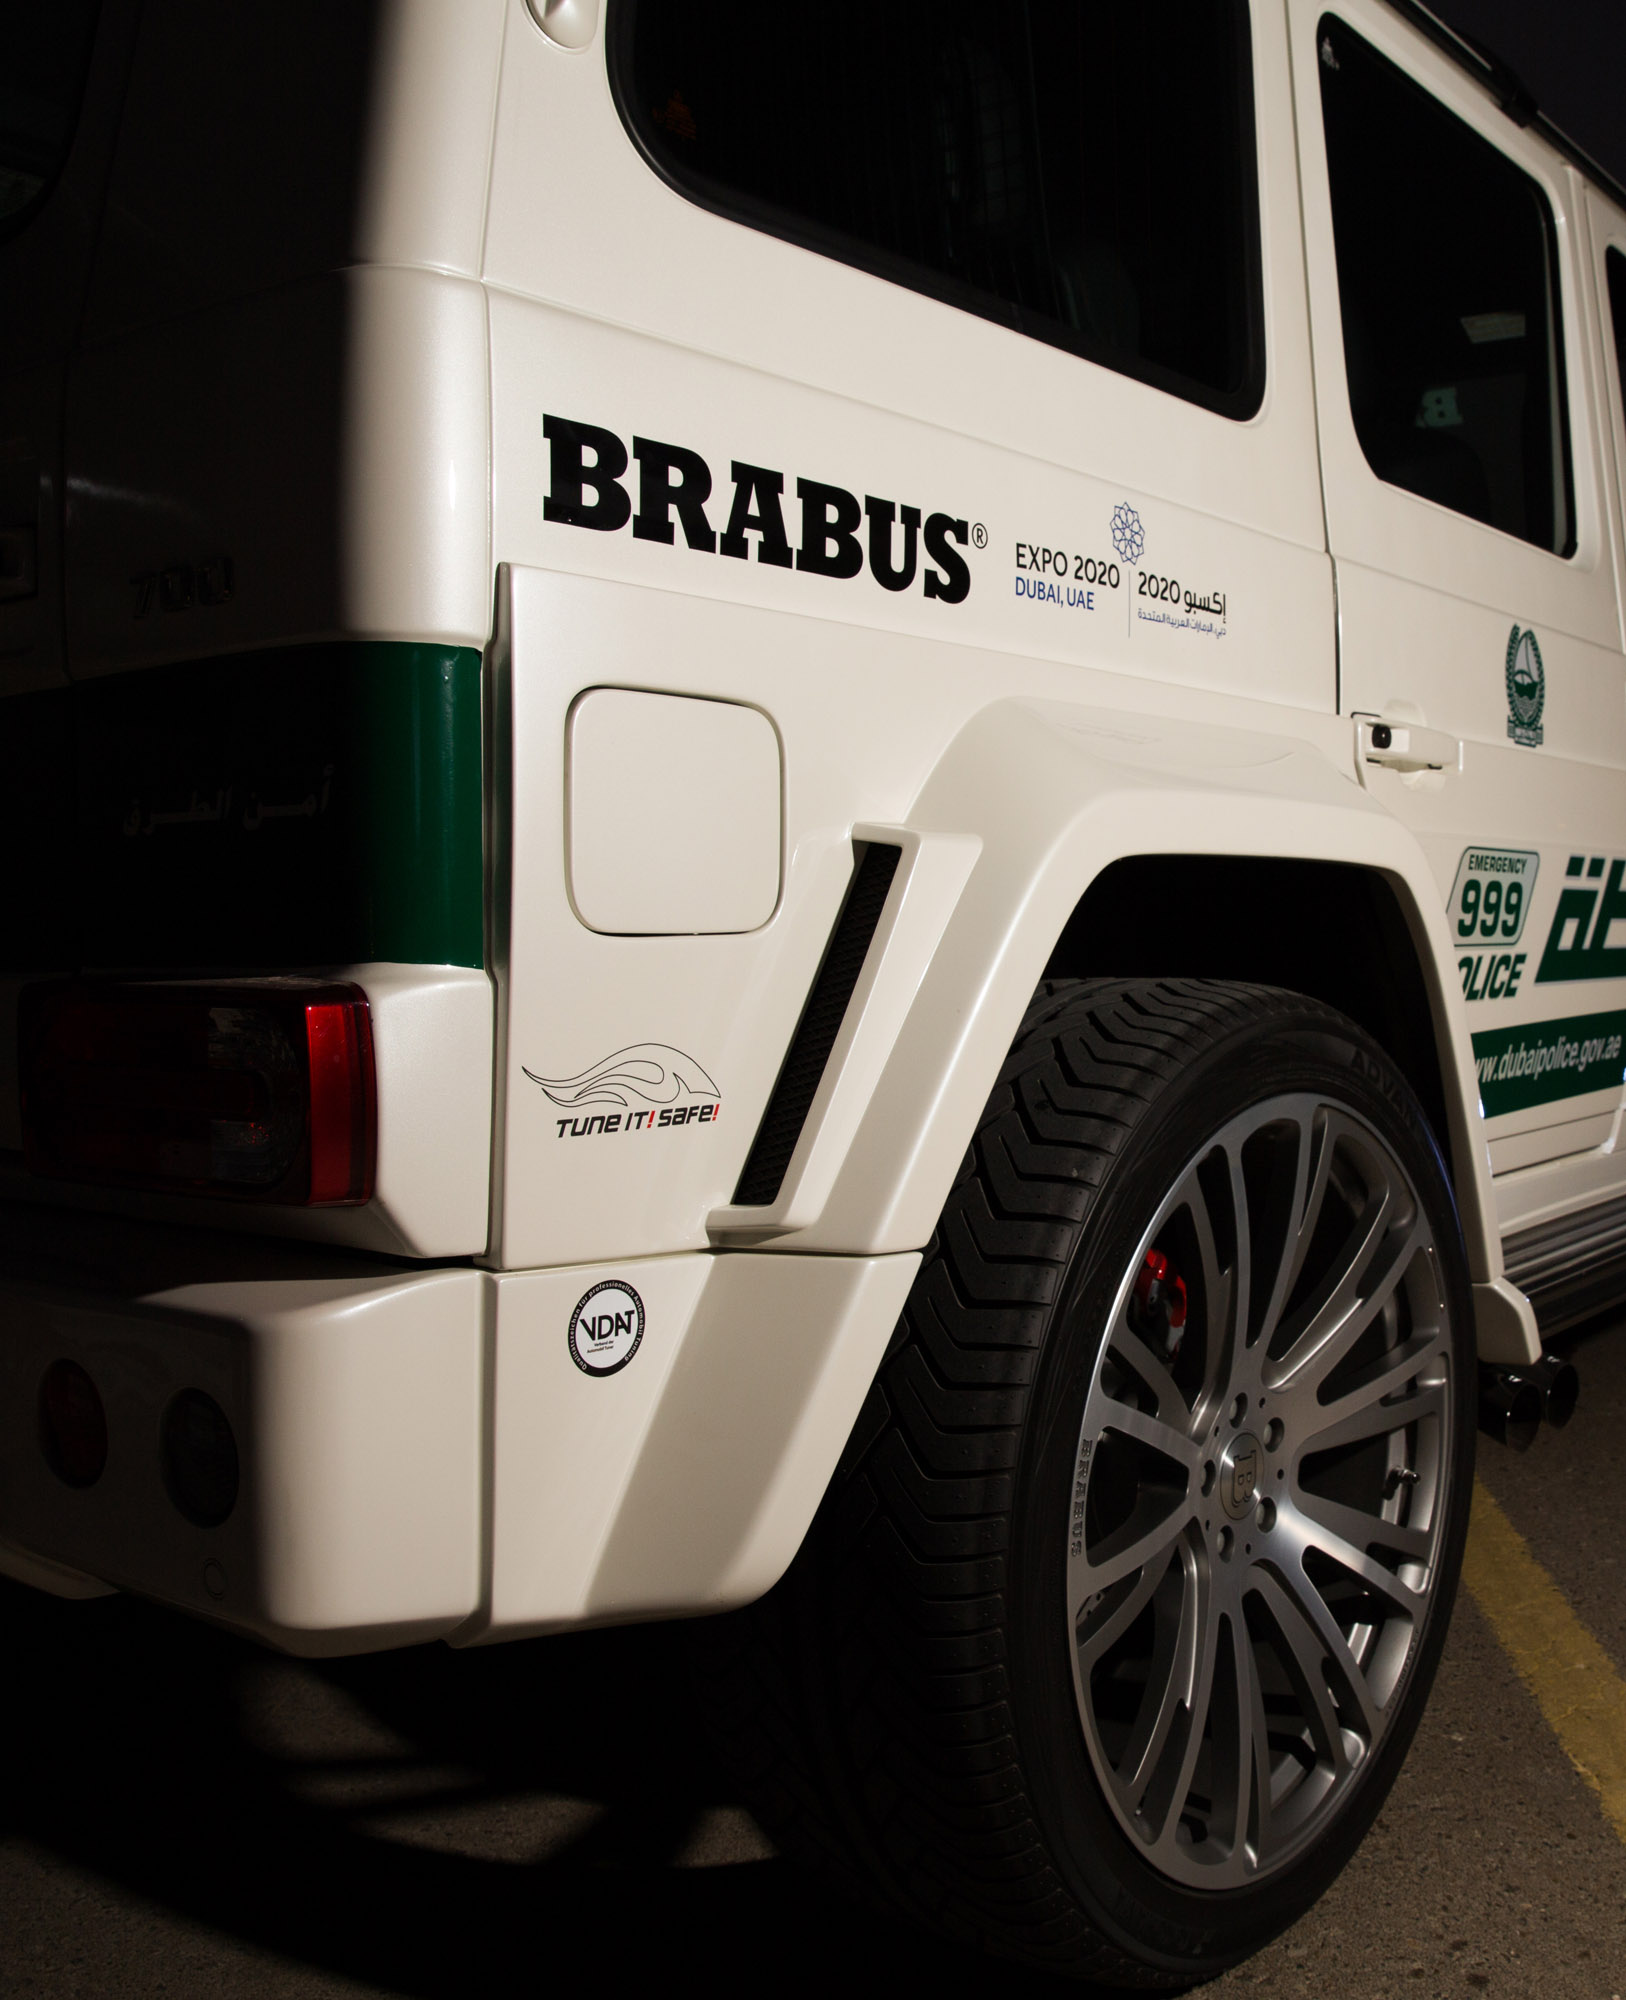 Brabus Mercedes-Benz G-Class B63S 700 Widestar Dubai Police